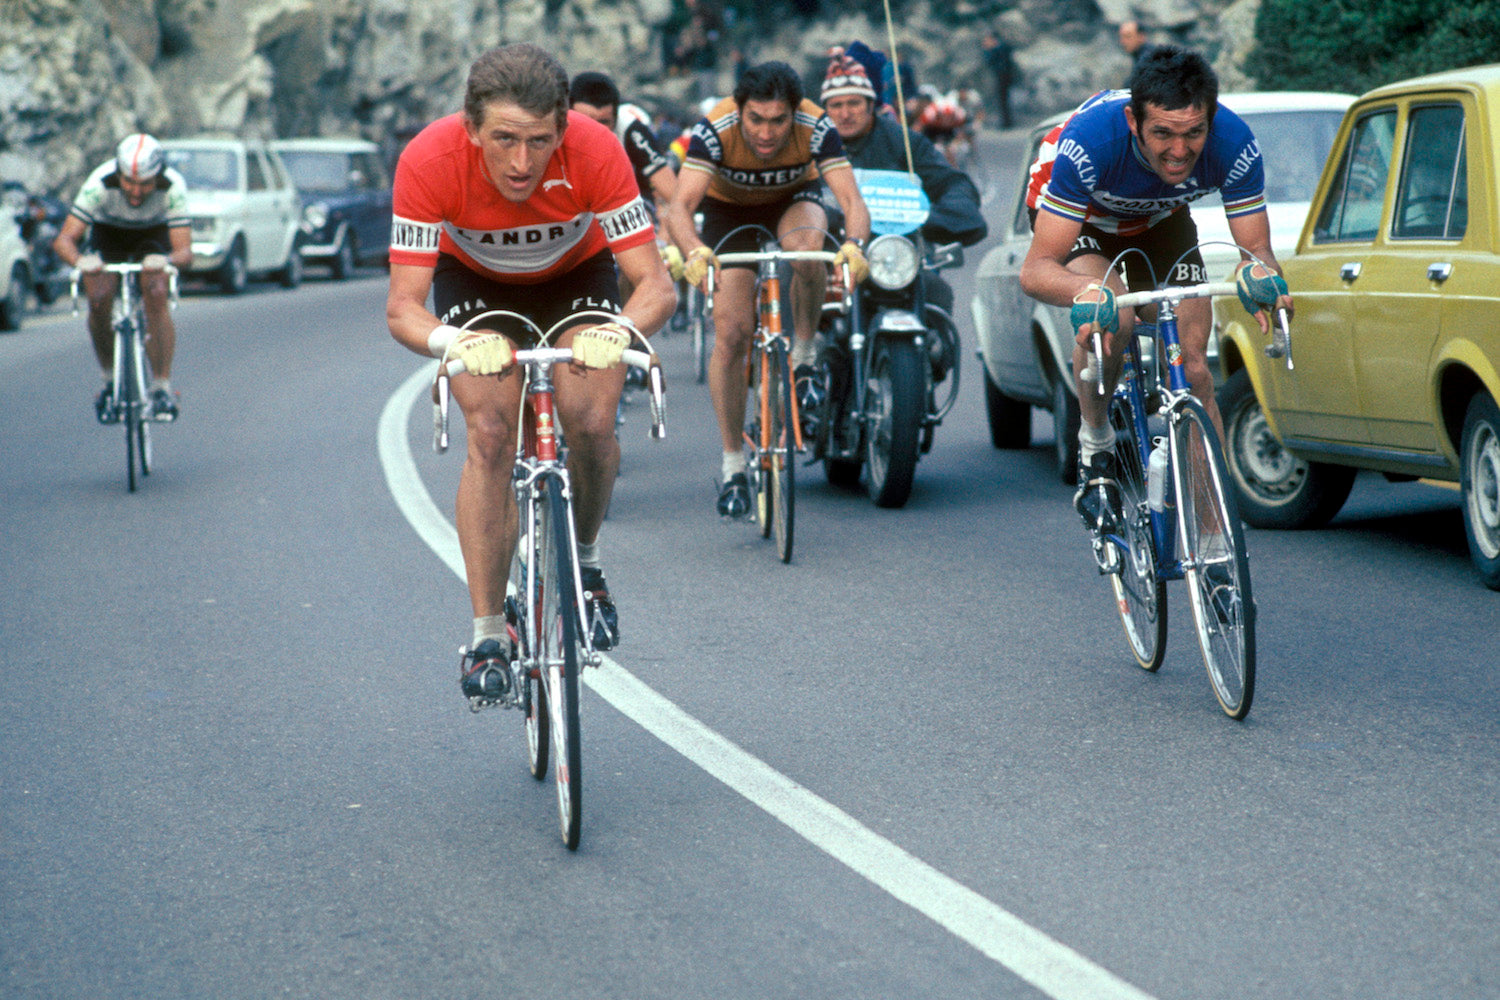 Roger De Vlaeminck, Freddy Maertens and Eddy Merckx at the 1976 edition of Milan San Remo. Photo credits: Offside / L'Equipe.